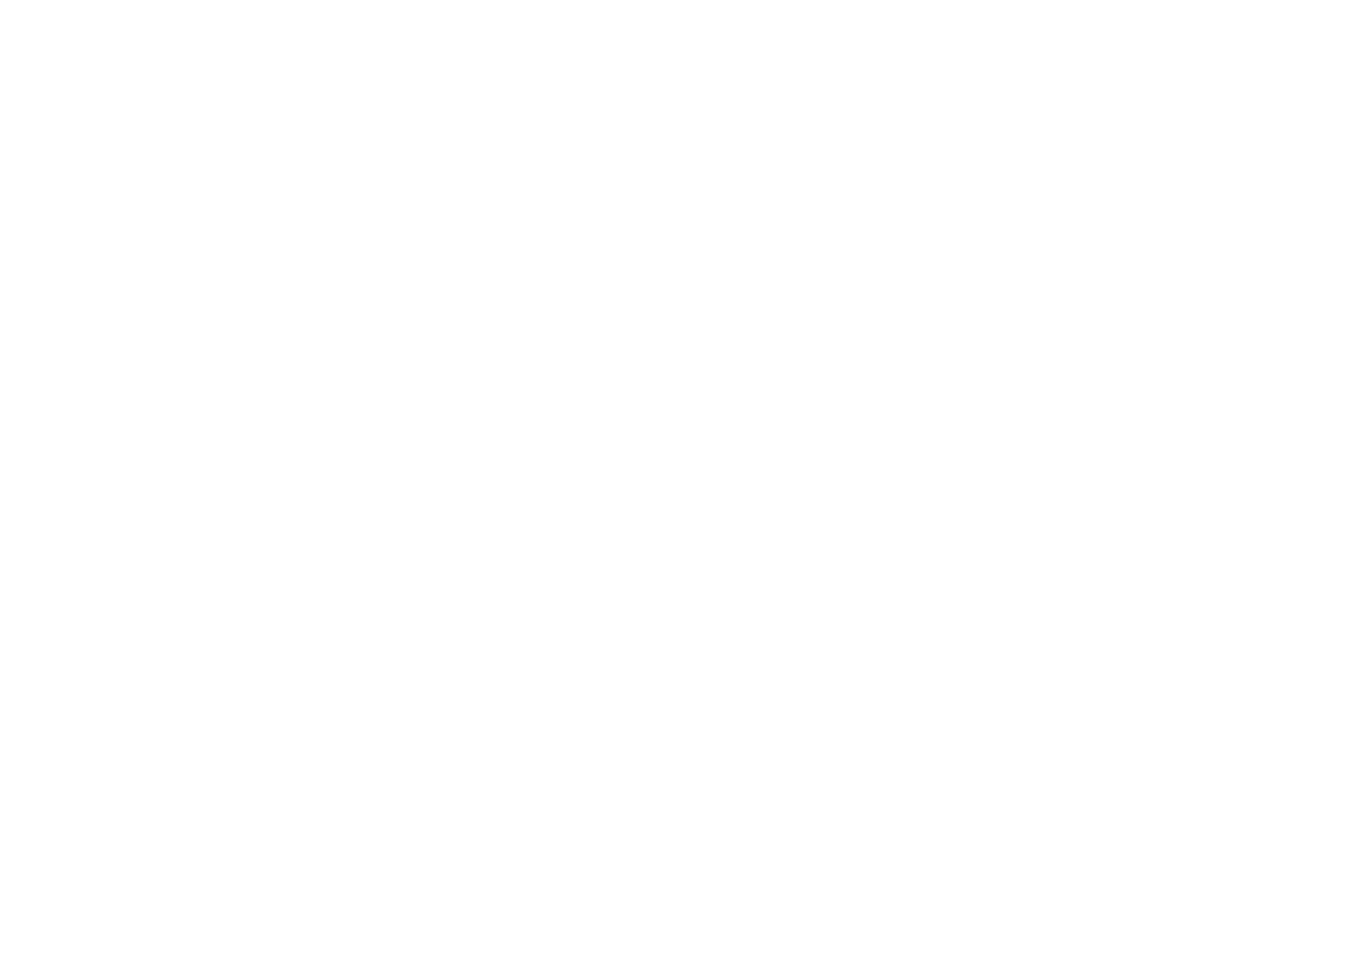 Anthem Coffee